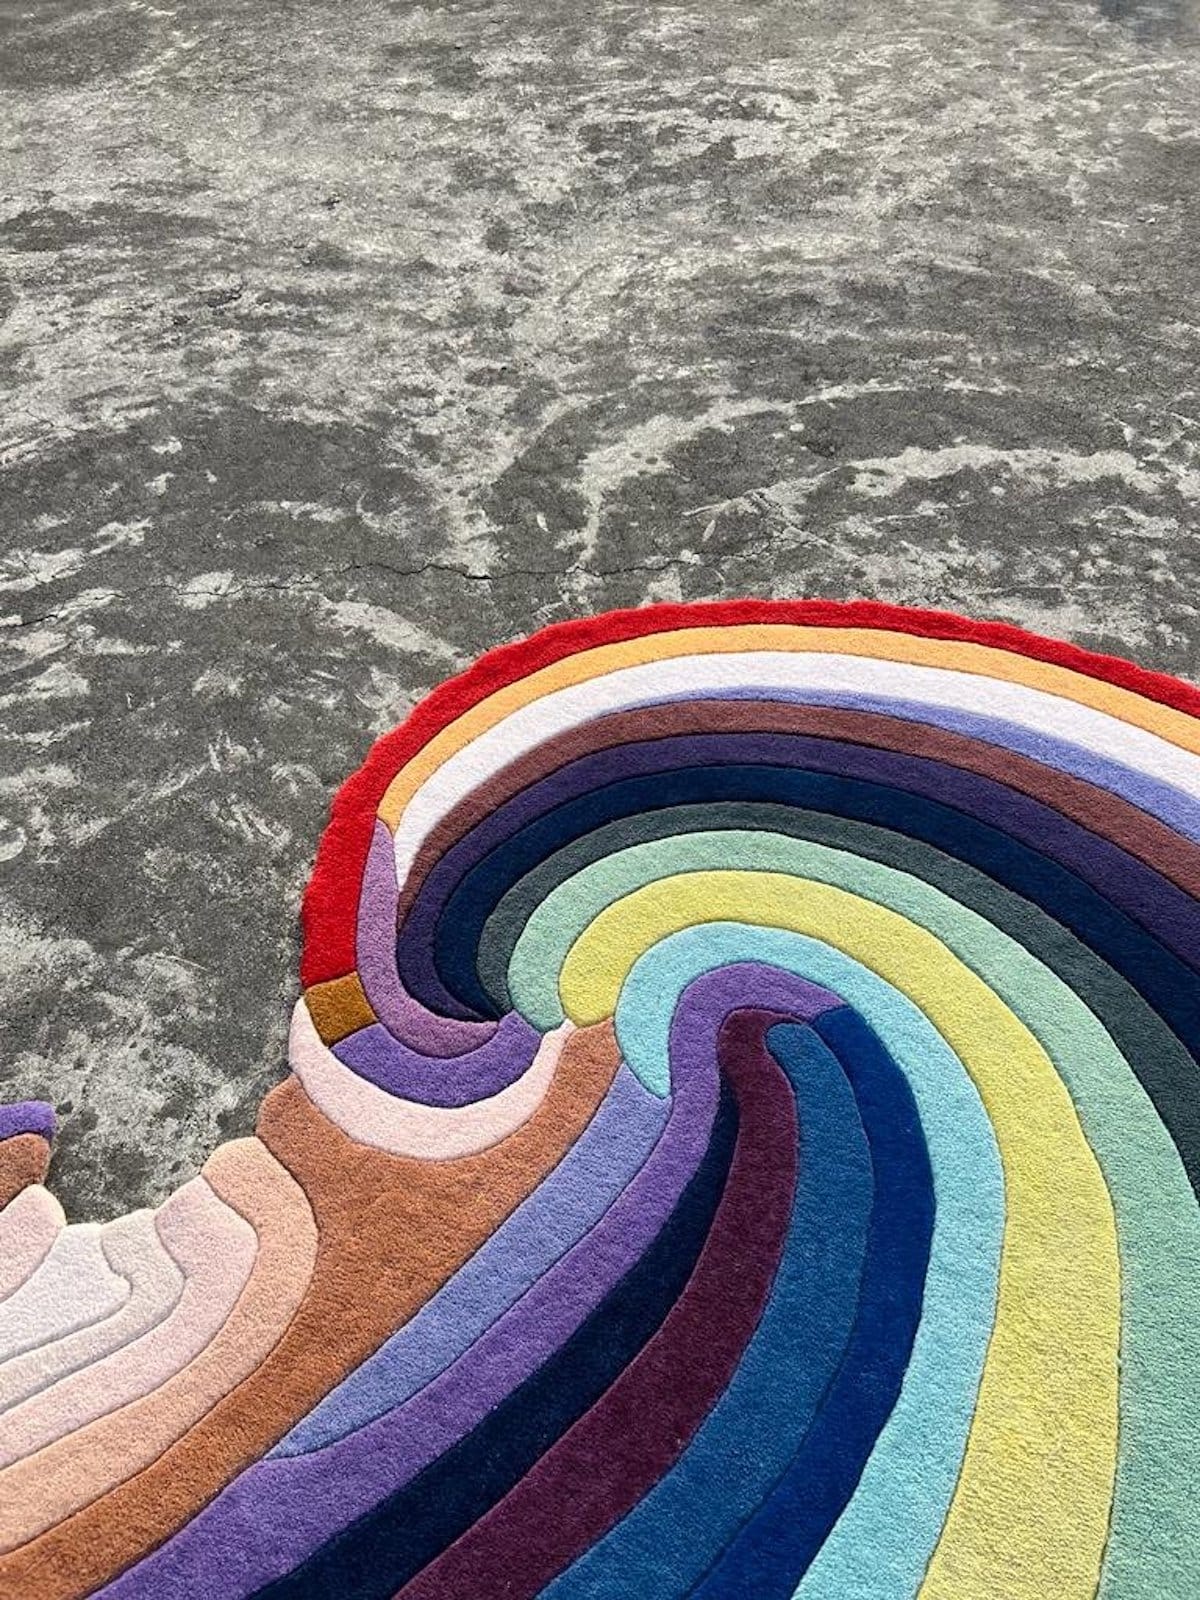 Rainbow Carpets by Ken Kelleher